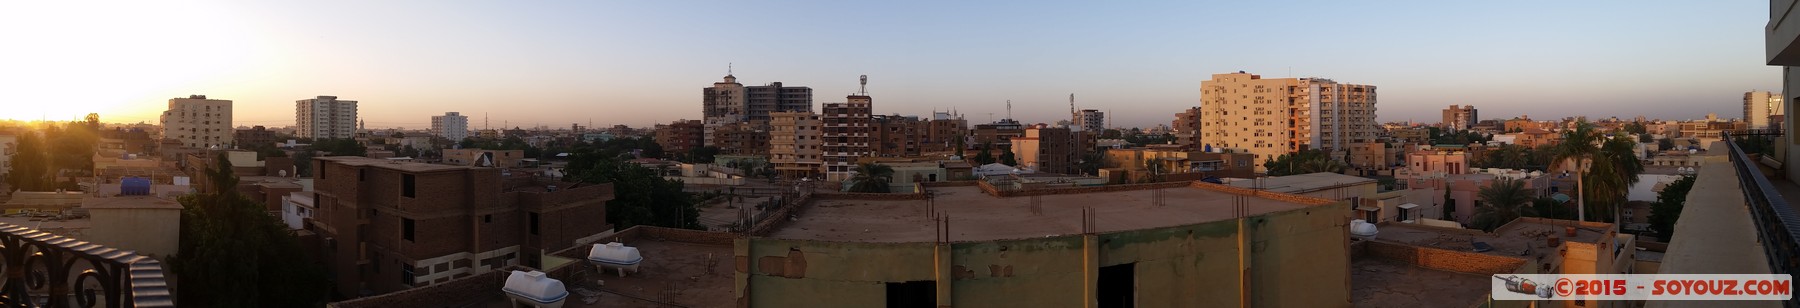 Khartoum by night - Amarat / Street 49
Mots-clés: Arkawit geo:lat=15.56801689 geo:lon=32.54755765 geotagged Khartoum SDN Soudan Nuit Amarat Street 49